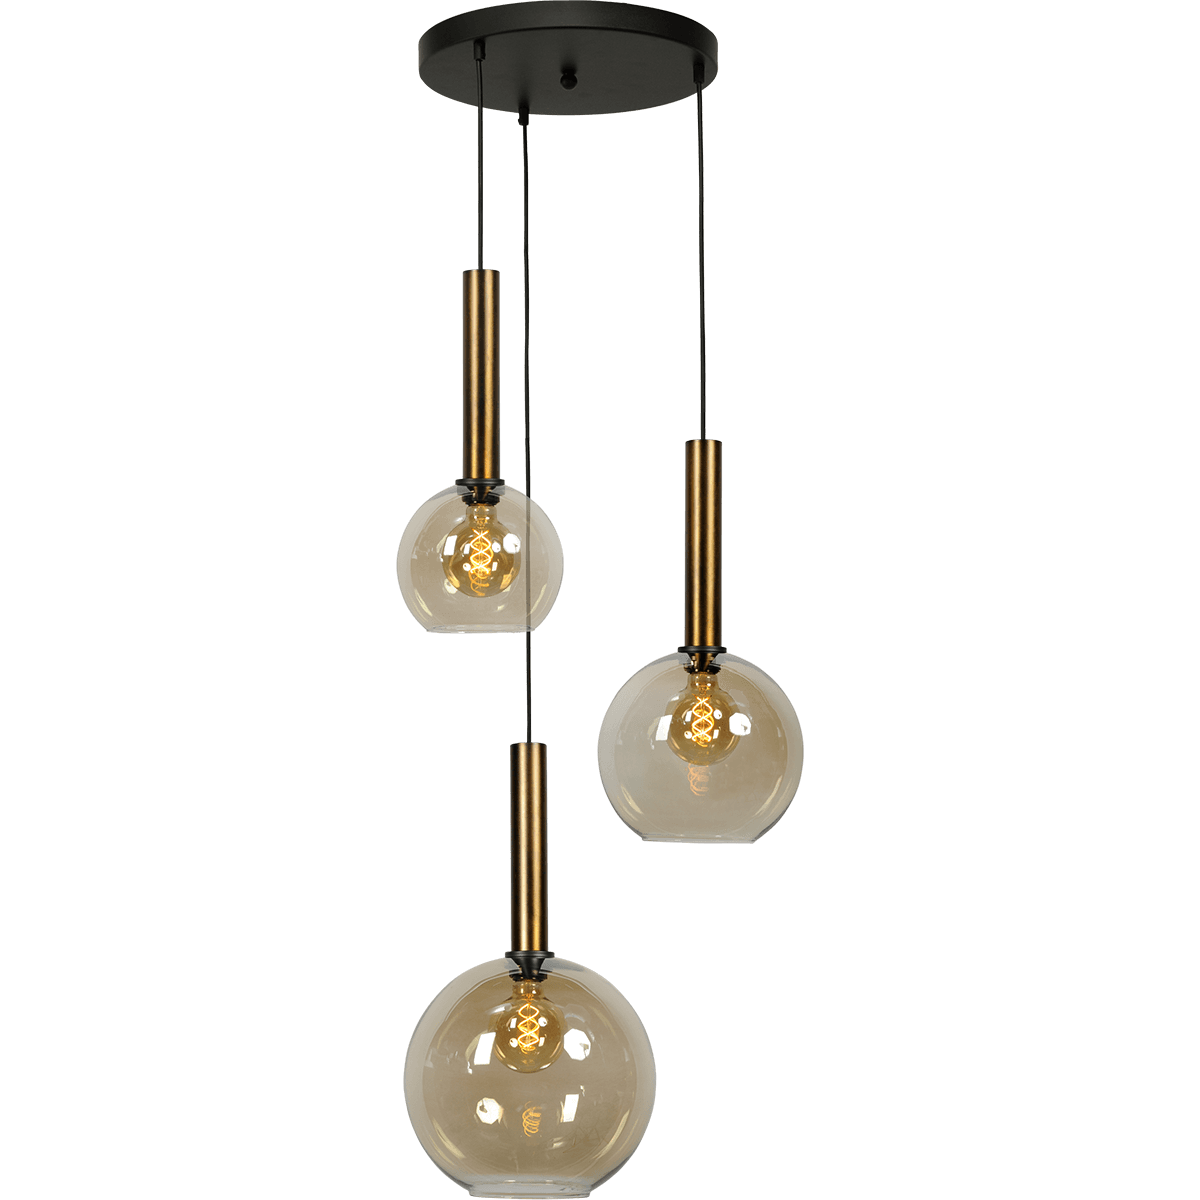 Hanglamp Bella -  3-lichts mat zwart/antiek brons Ø35cm - zwarte pvc kabel 150cm + glas 1x 62260-05-20-20 - 1x 62260-05-25 + 1x 62260-05-30 - MASTERLIGHT